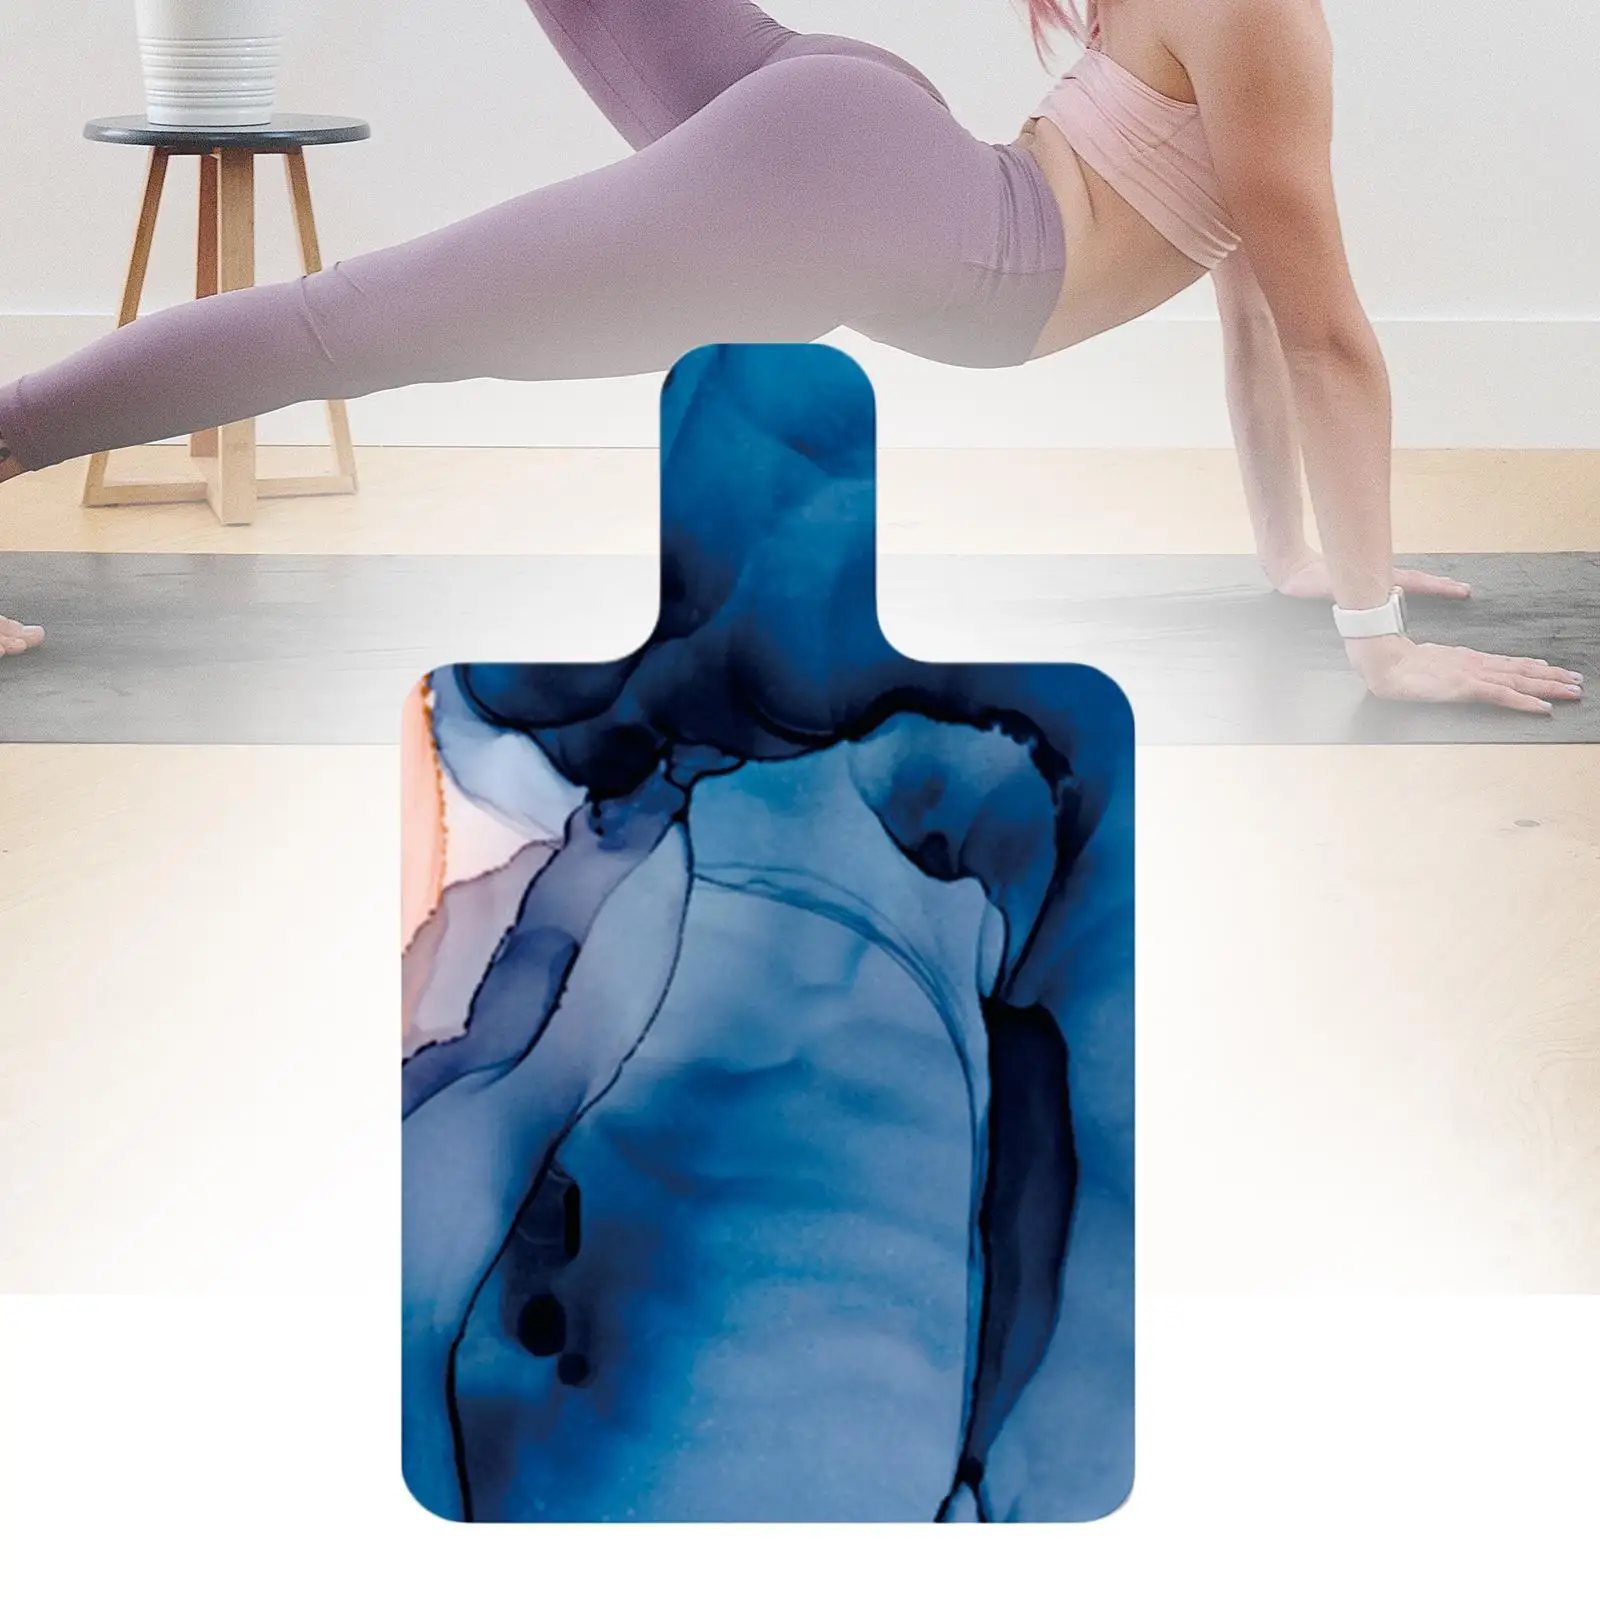 Yoga Pad Gym Floor Workout Exercise Mat Cushion Pilates Reformer Mat Towel